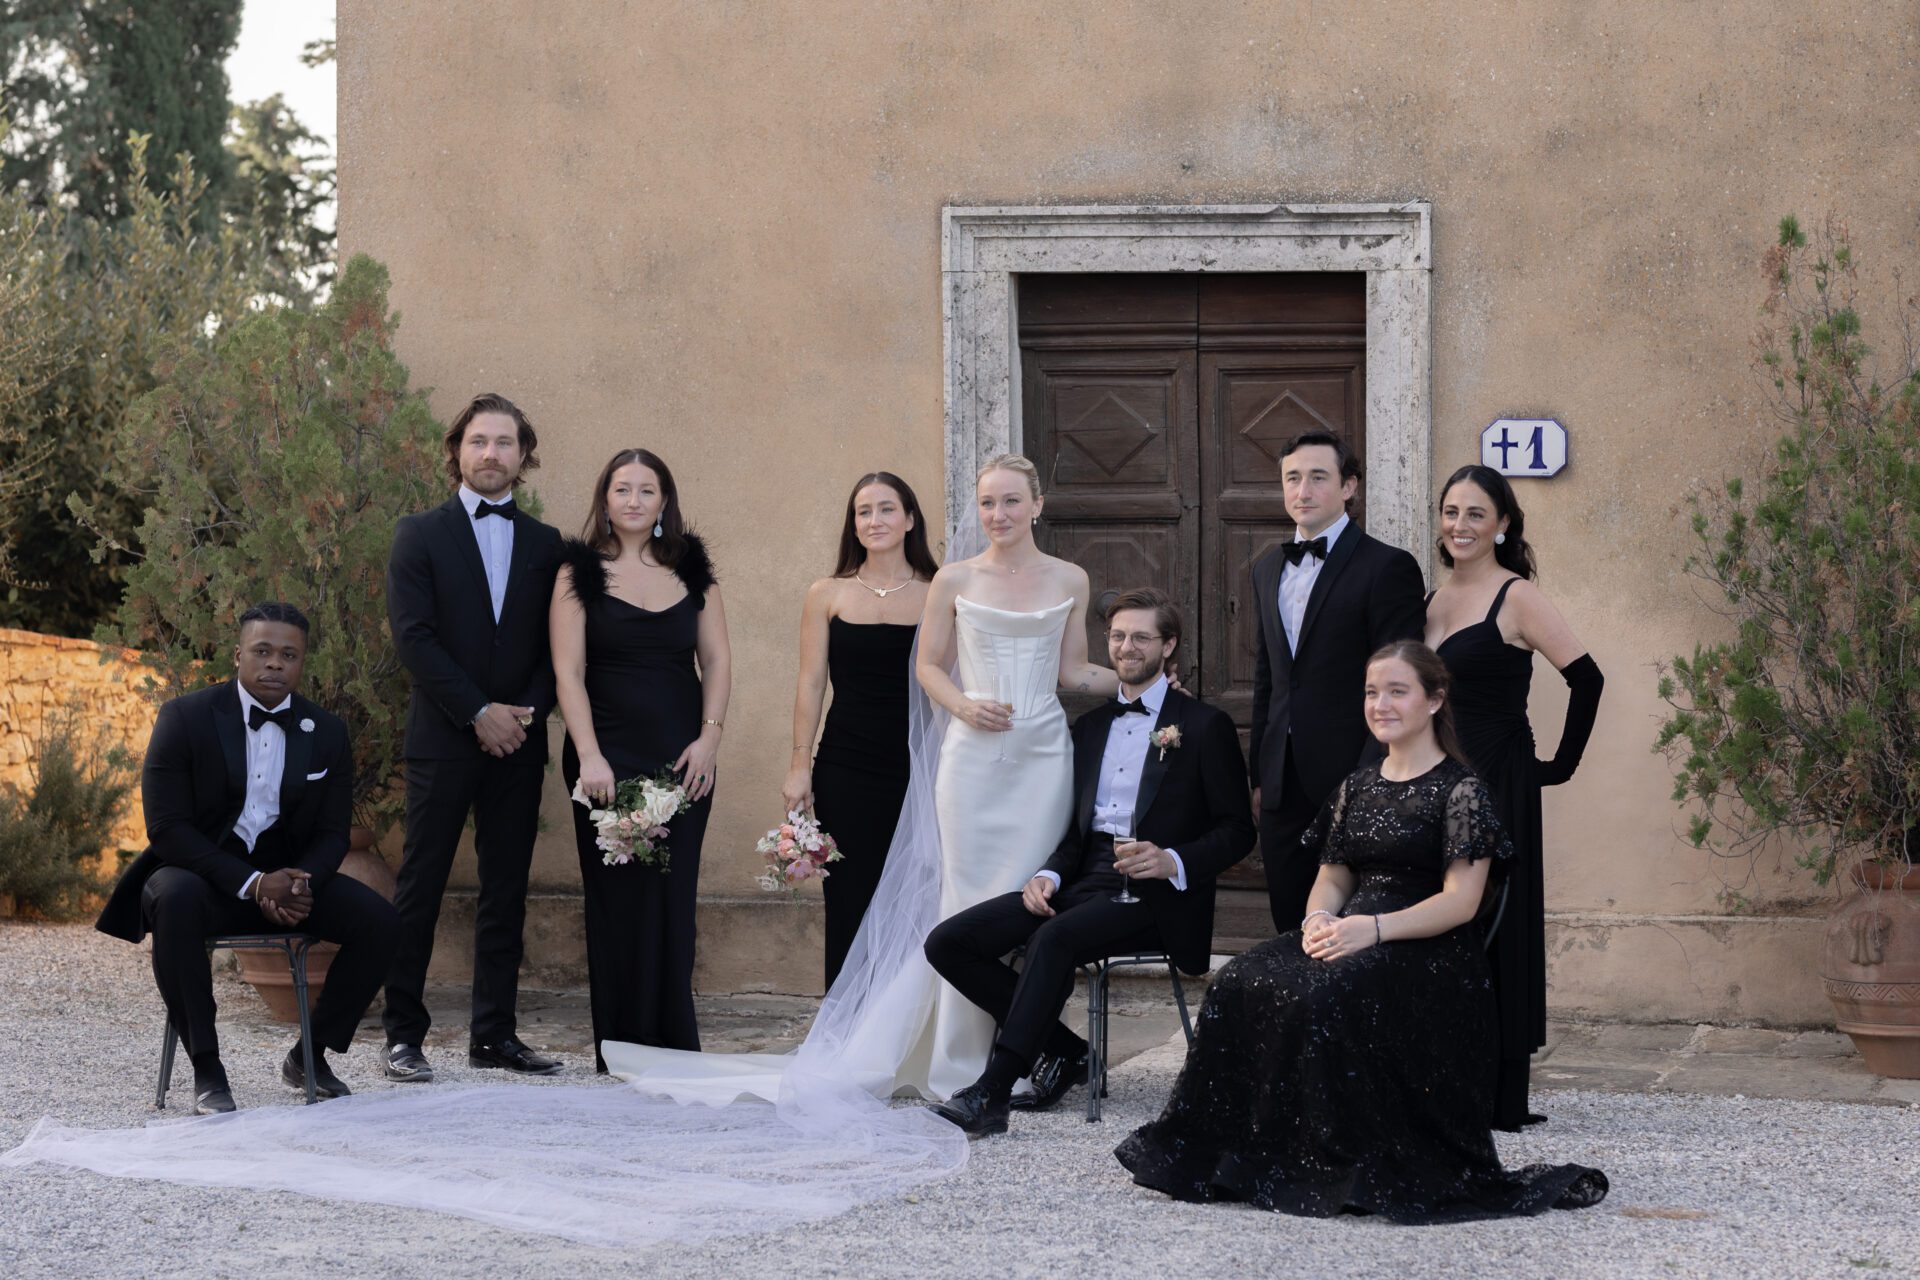 Group portraits at luxury Italian wedding venue